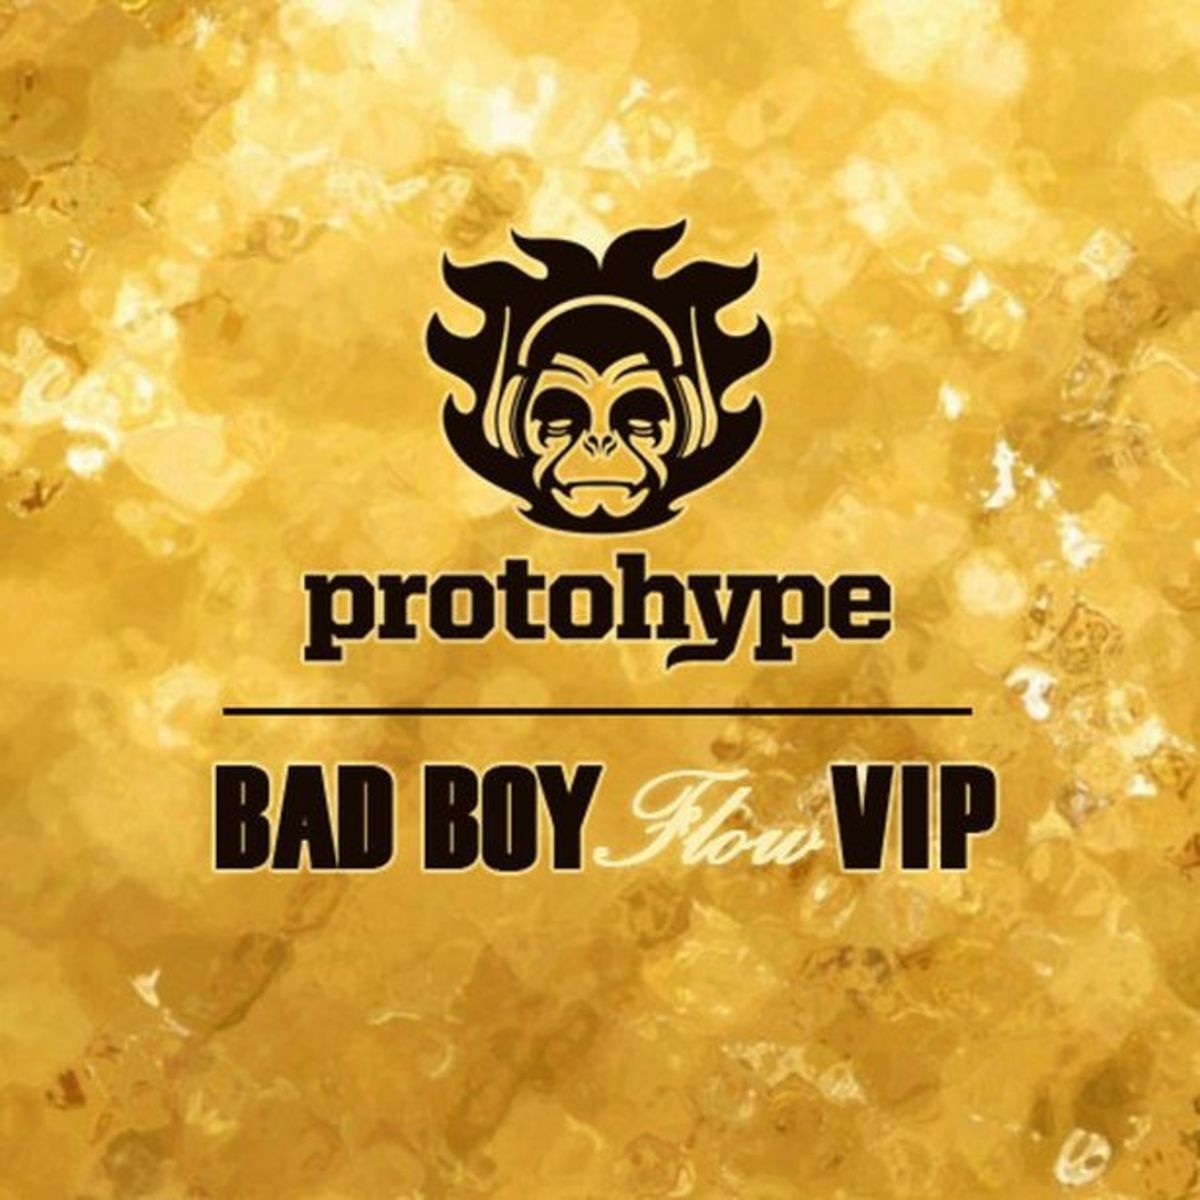 EDM Download: Protohype & ETC!ETC! "Bad Boy Flow" (Remix); File Under Dubstep For The VIP